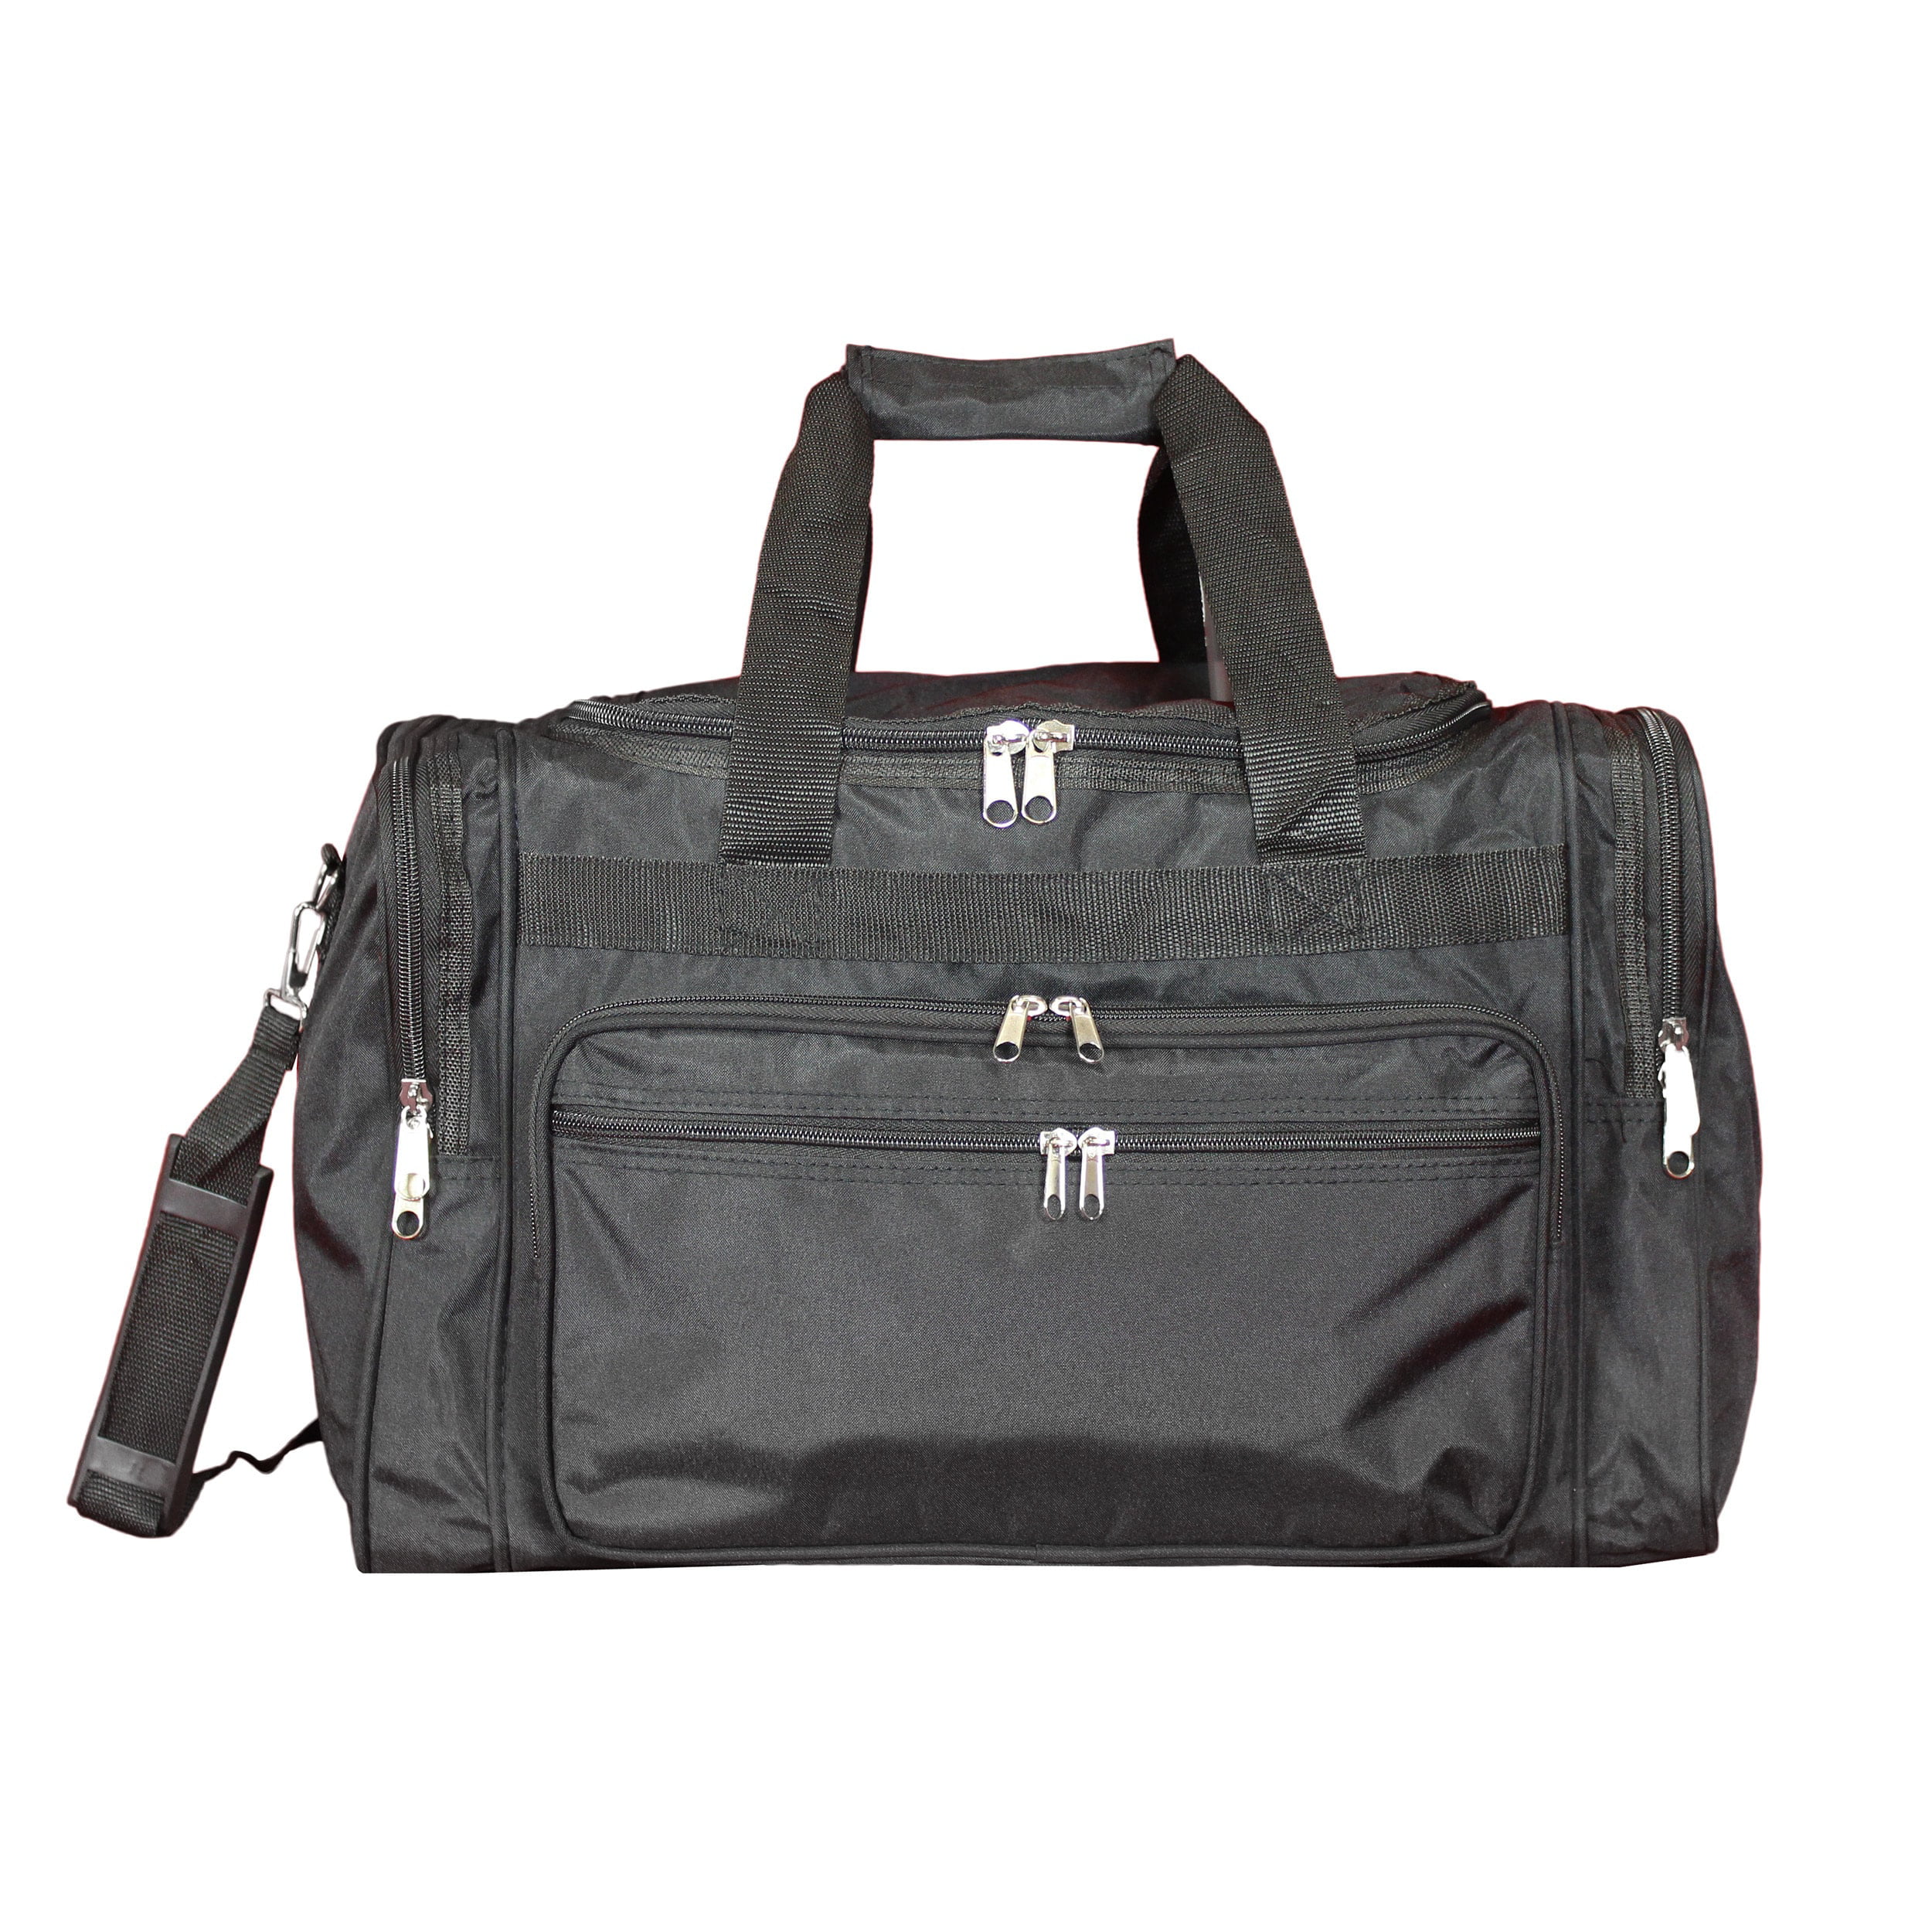 World Traveler Black 19-inch Lightweight Carry-On Duffle Bag - 0